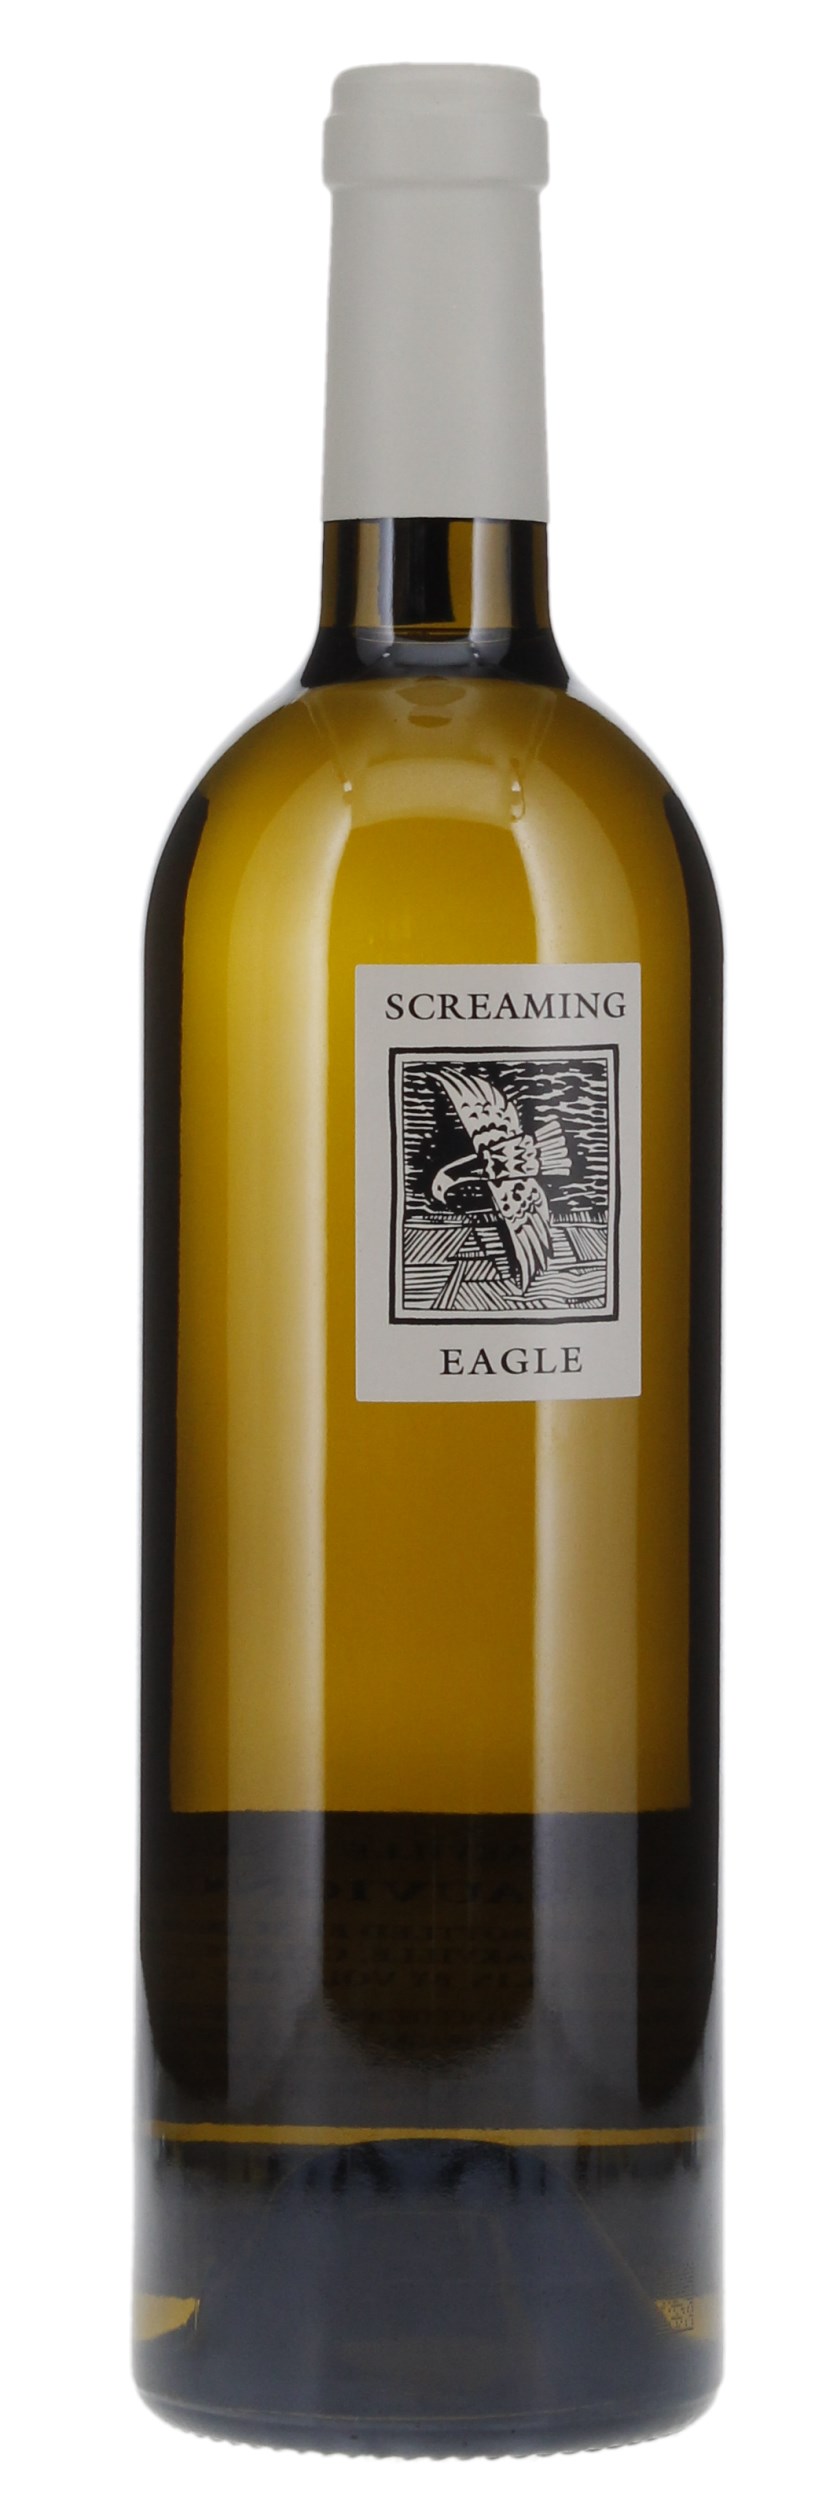 2019 Screaming Eagle Sauvignon Blanc, 750ml